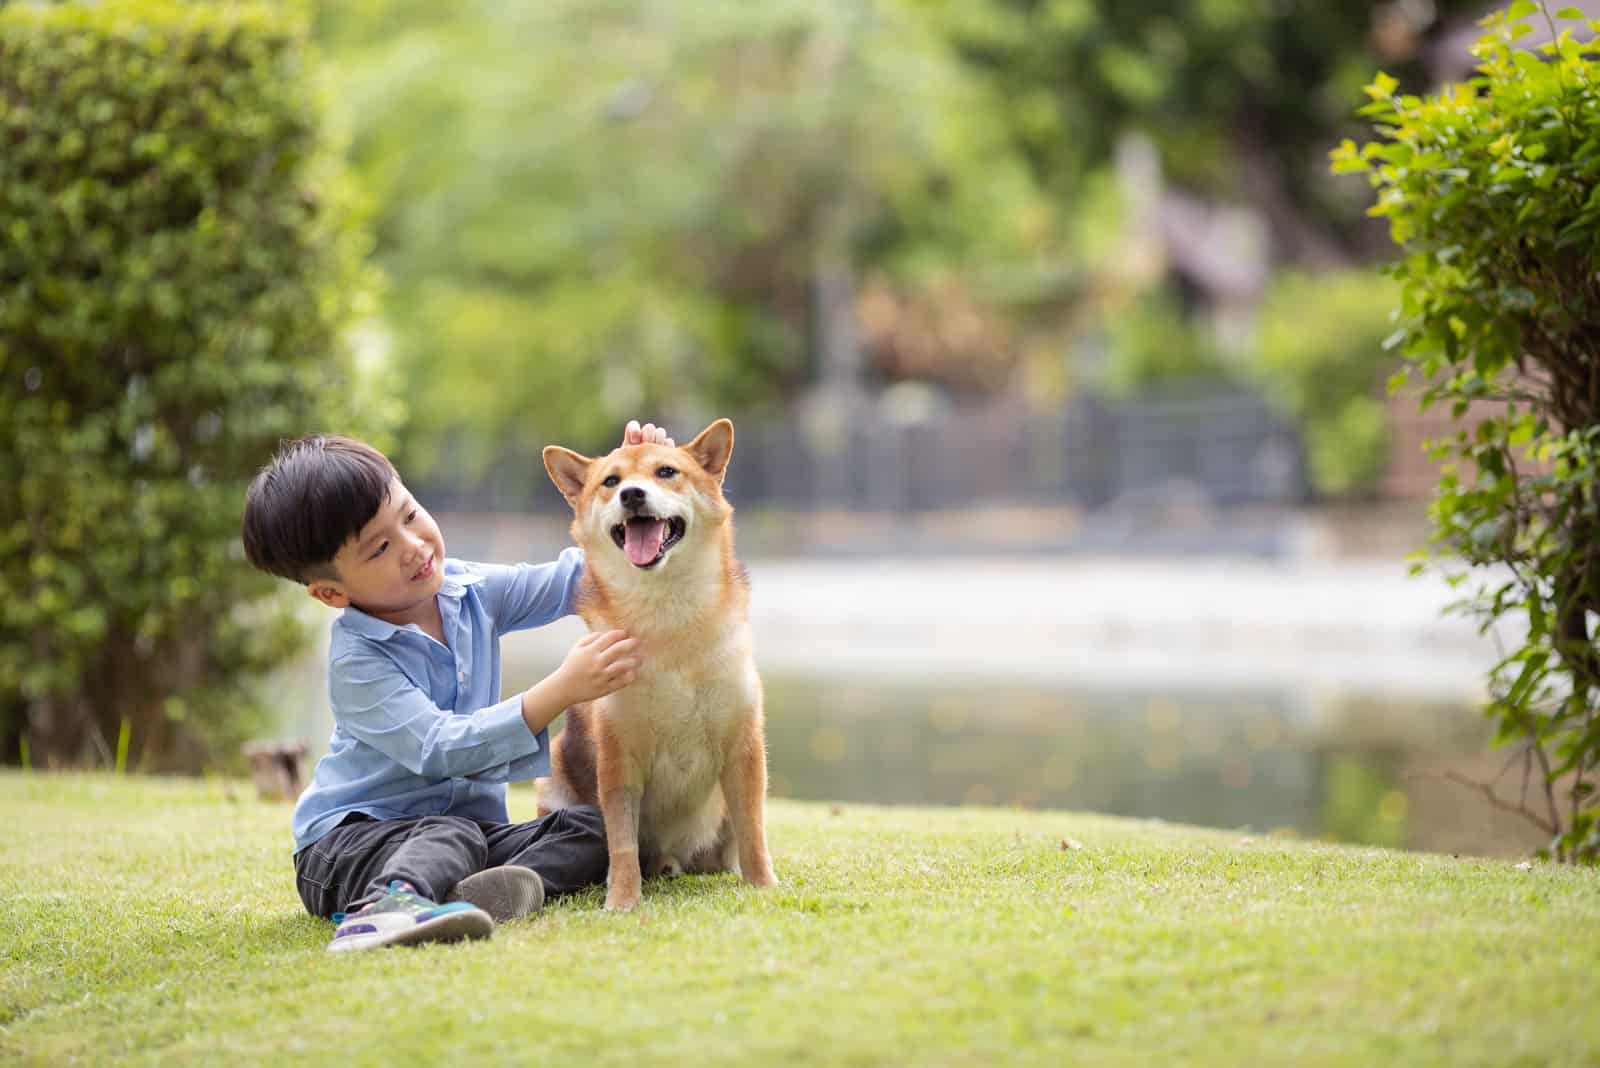 boy and Shiba Inu dog are enjoying playing